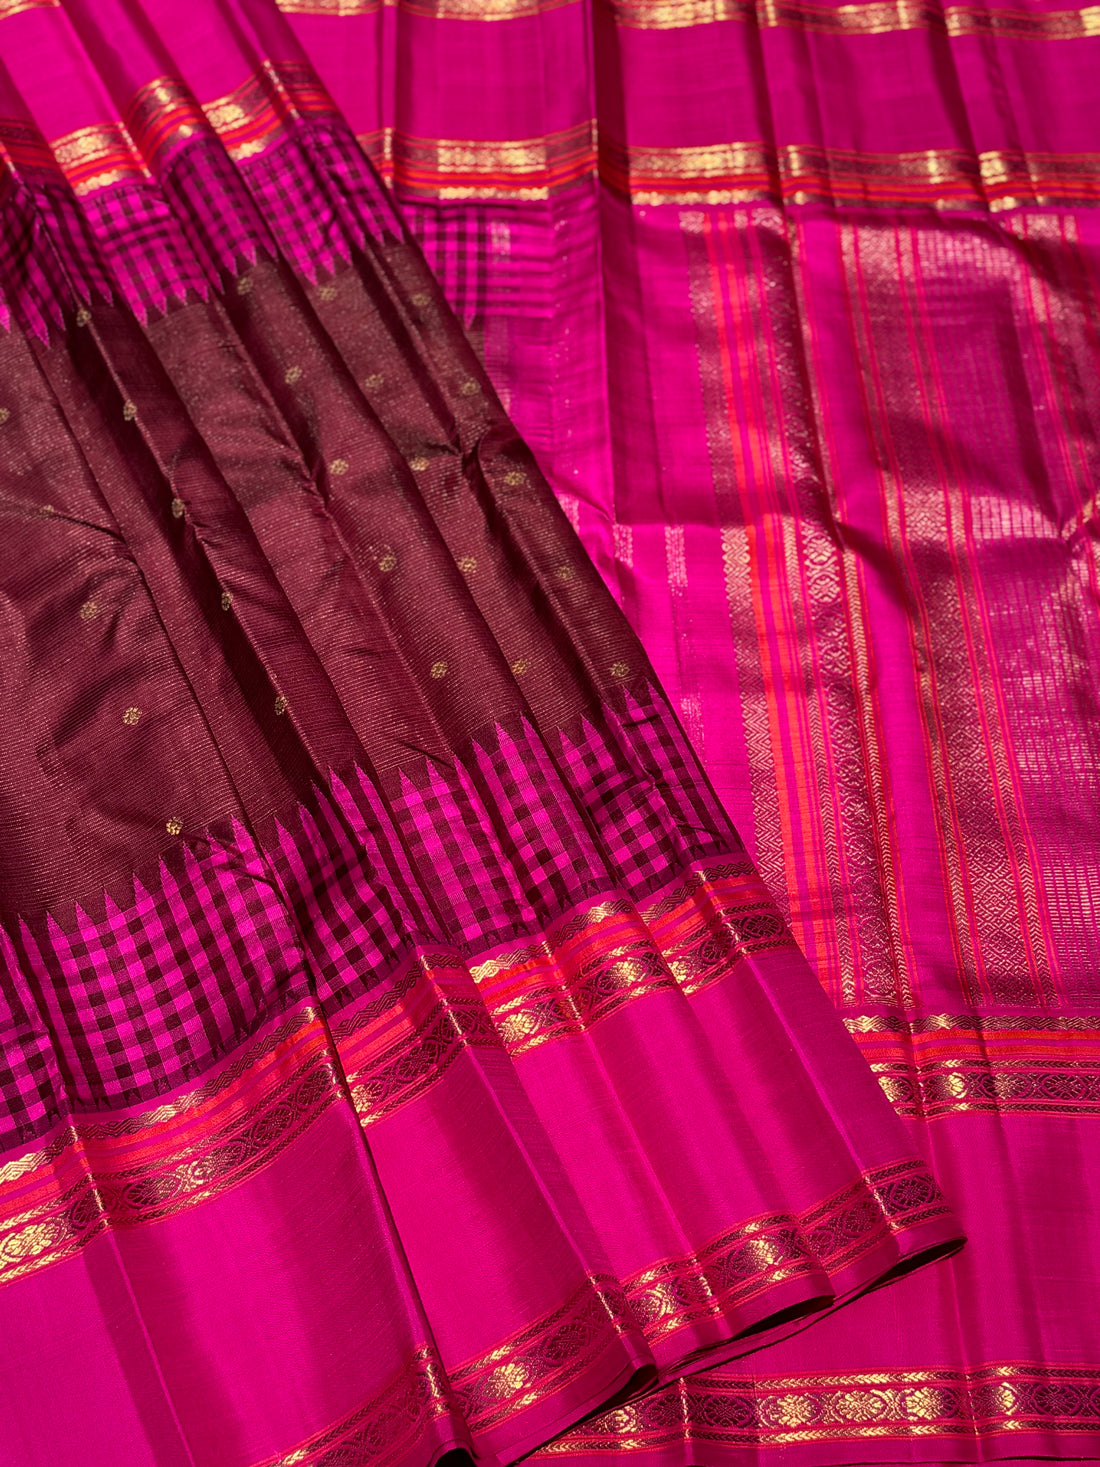 PARAMPARA Kanchivaram silk saree in V-paakku betelnut  brown with pink shade